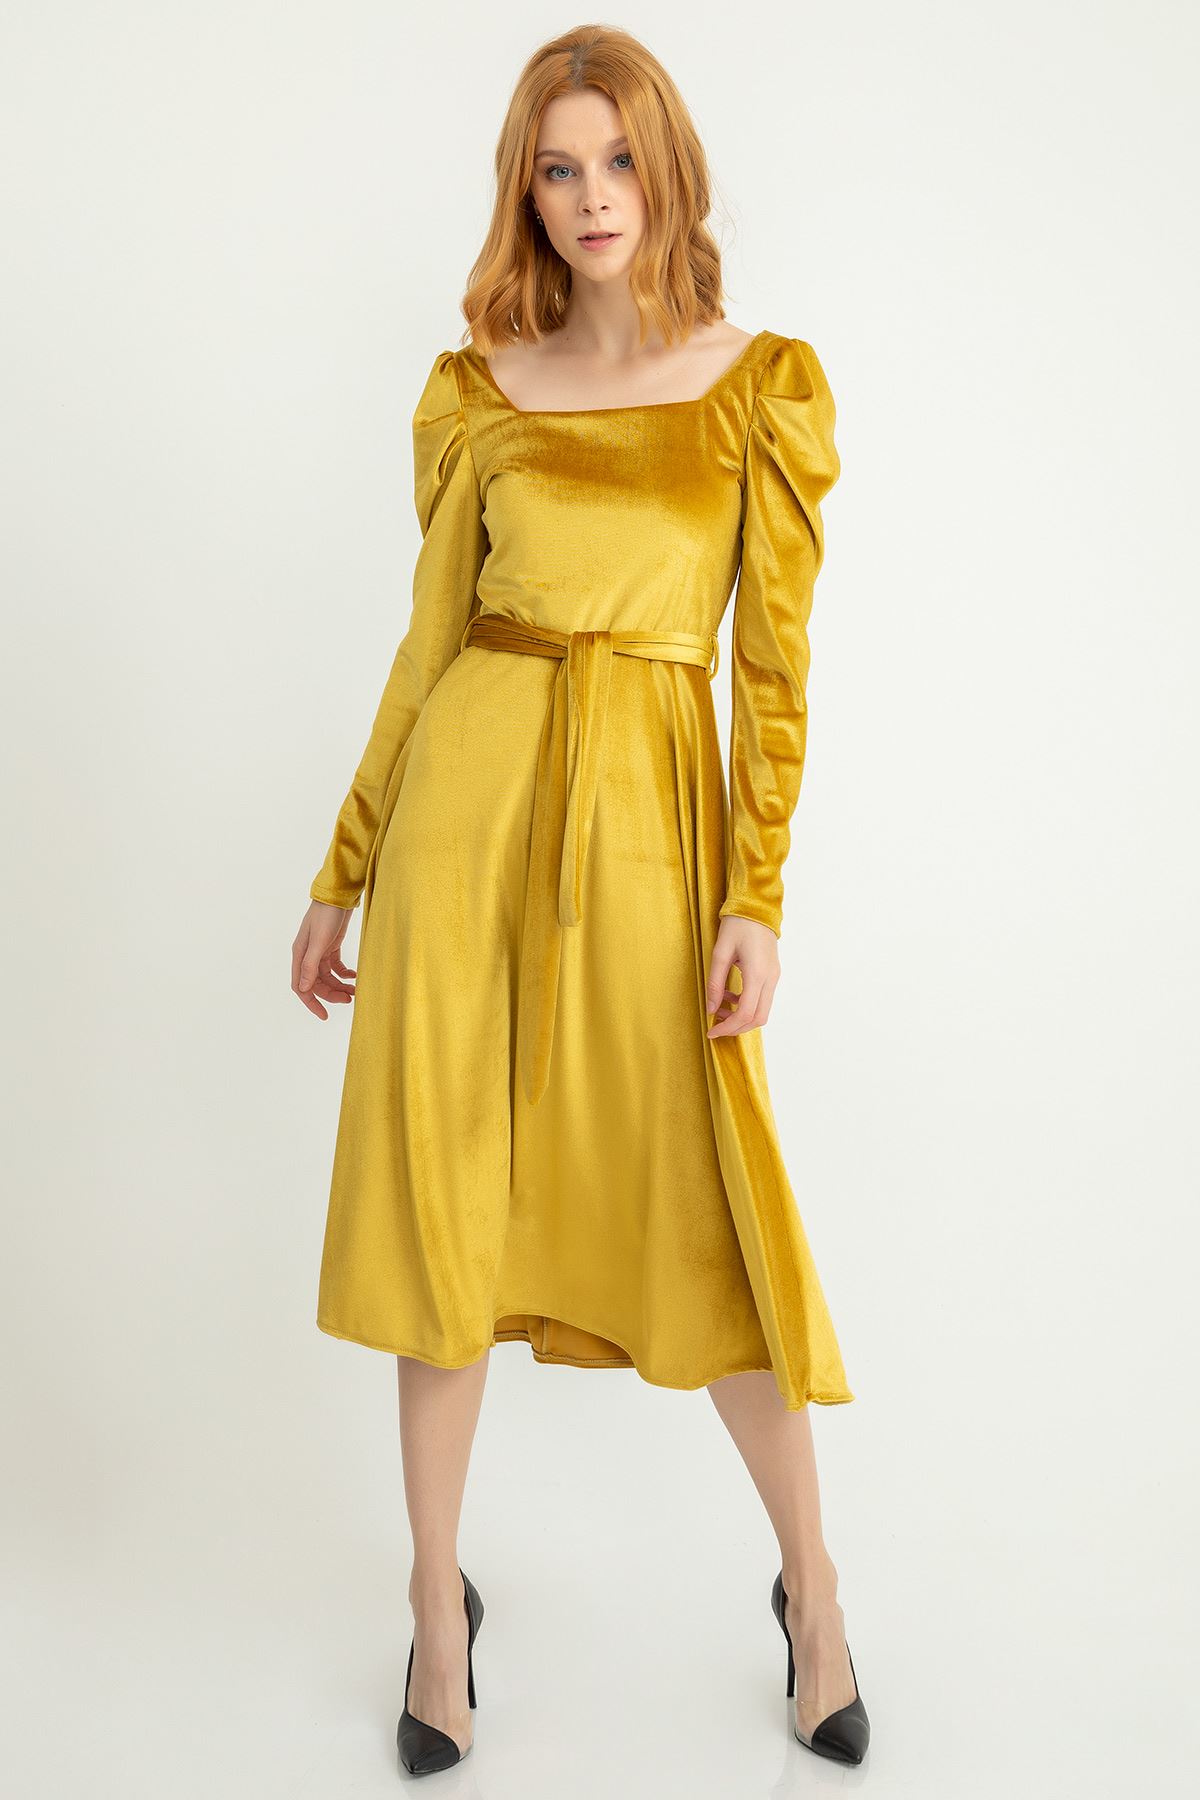 Velvet Fabric Square Collar Watermlon Sleeve Belted Women Dress - Mustard